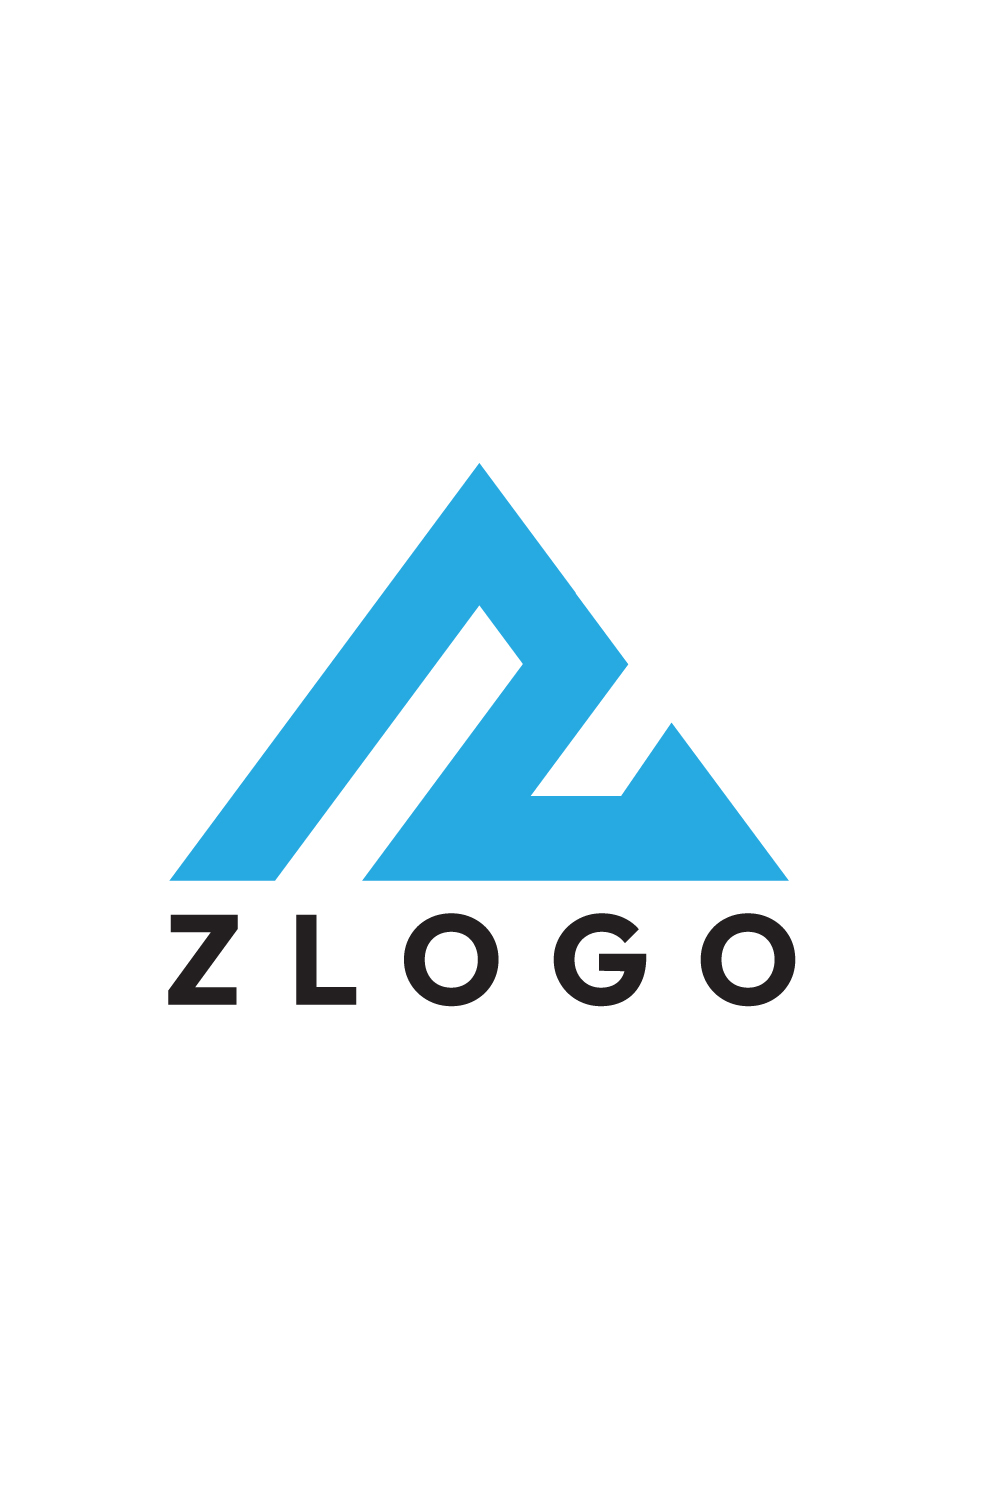 Z Triangle Logo Design Bundle: Master Your Brand Identity pinterest preview image.